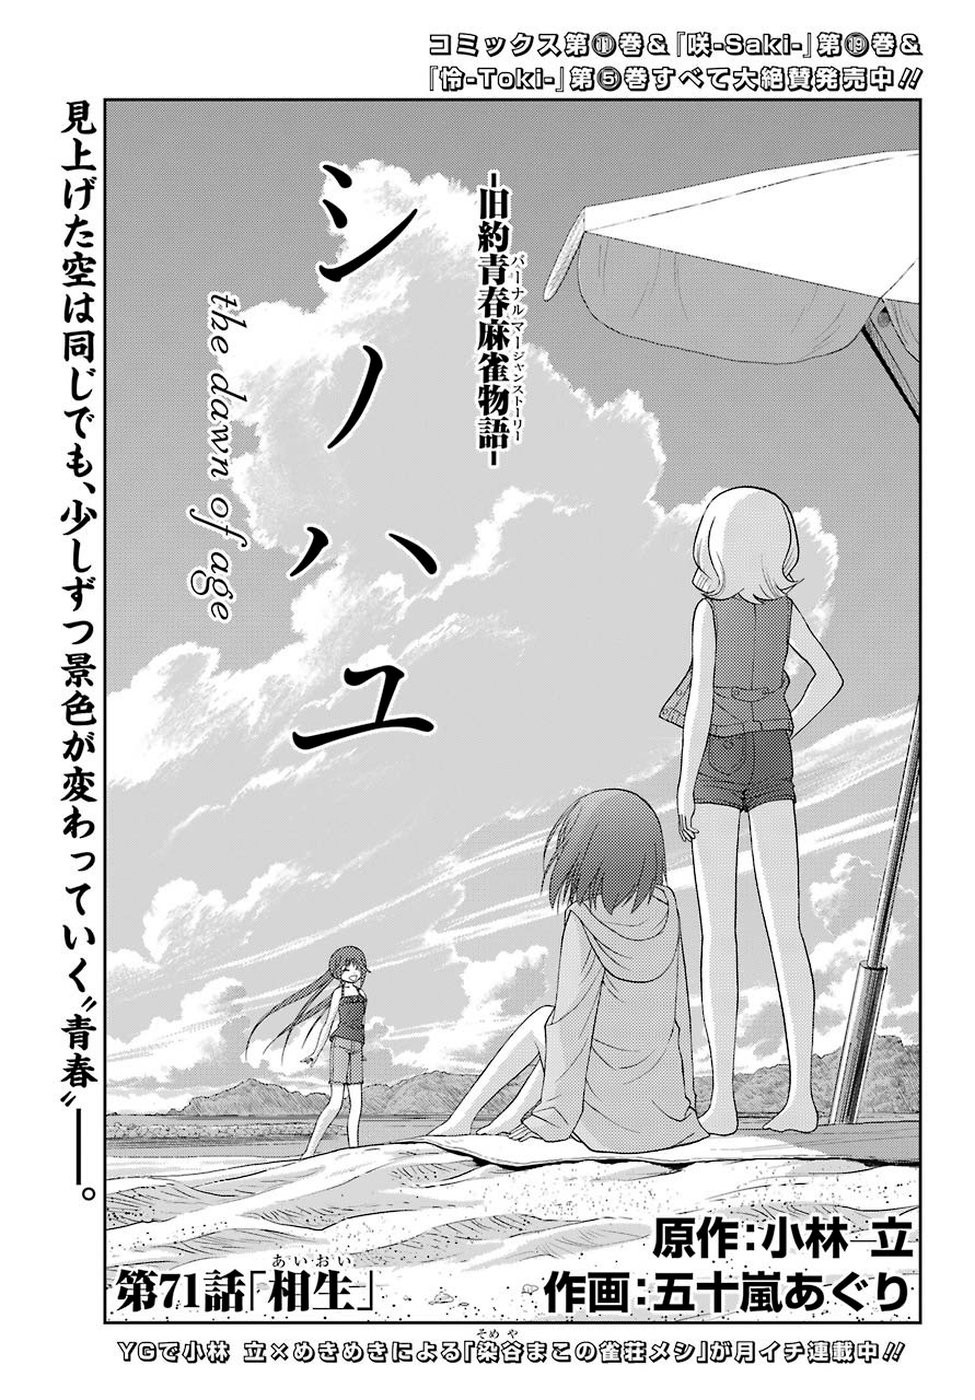 Shinohayu - The Dawn of Age Manga - Chapter 071 - Page 1